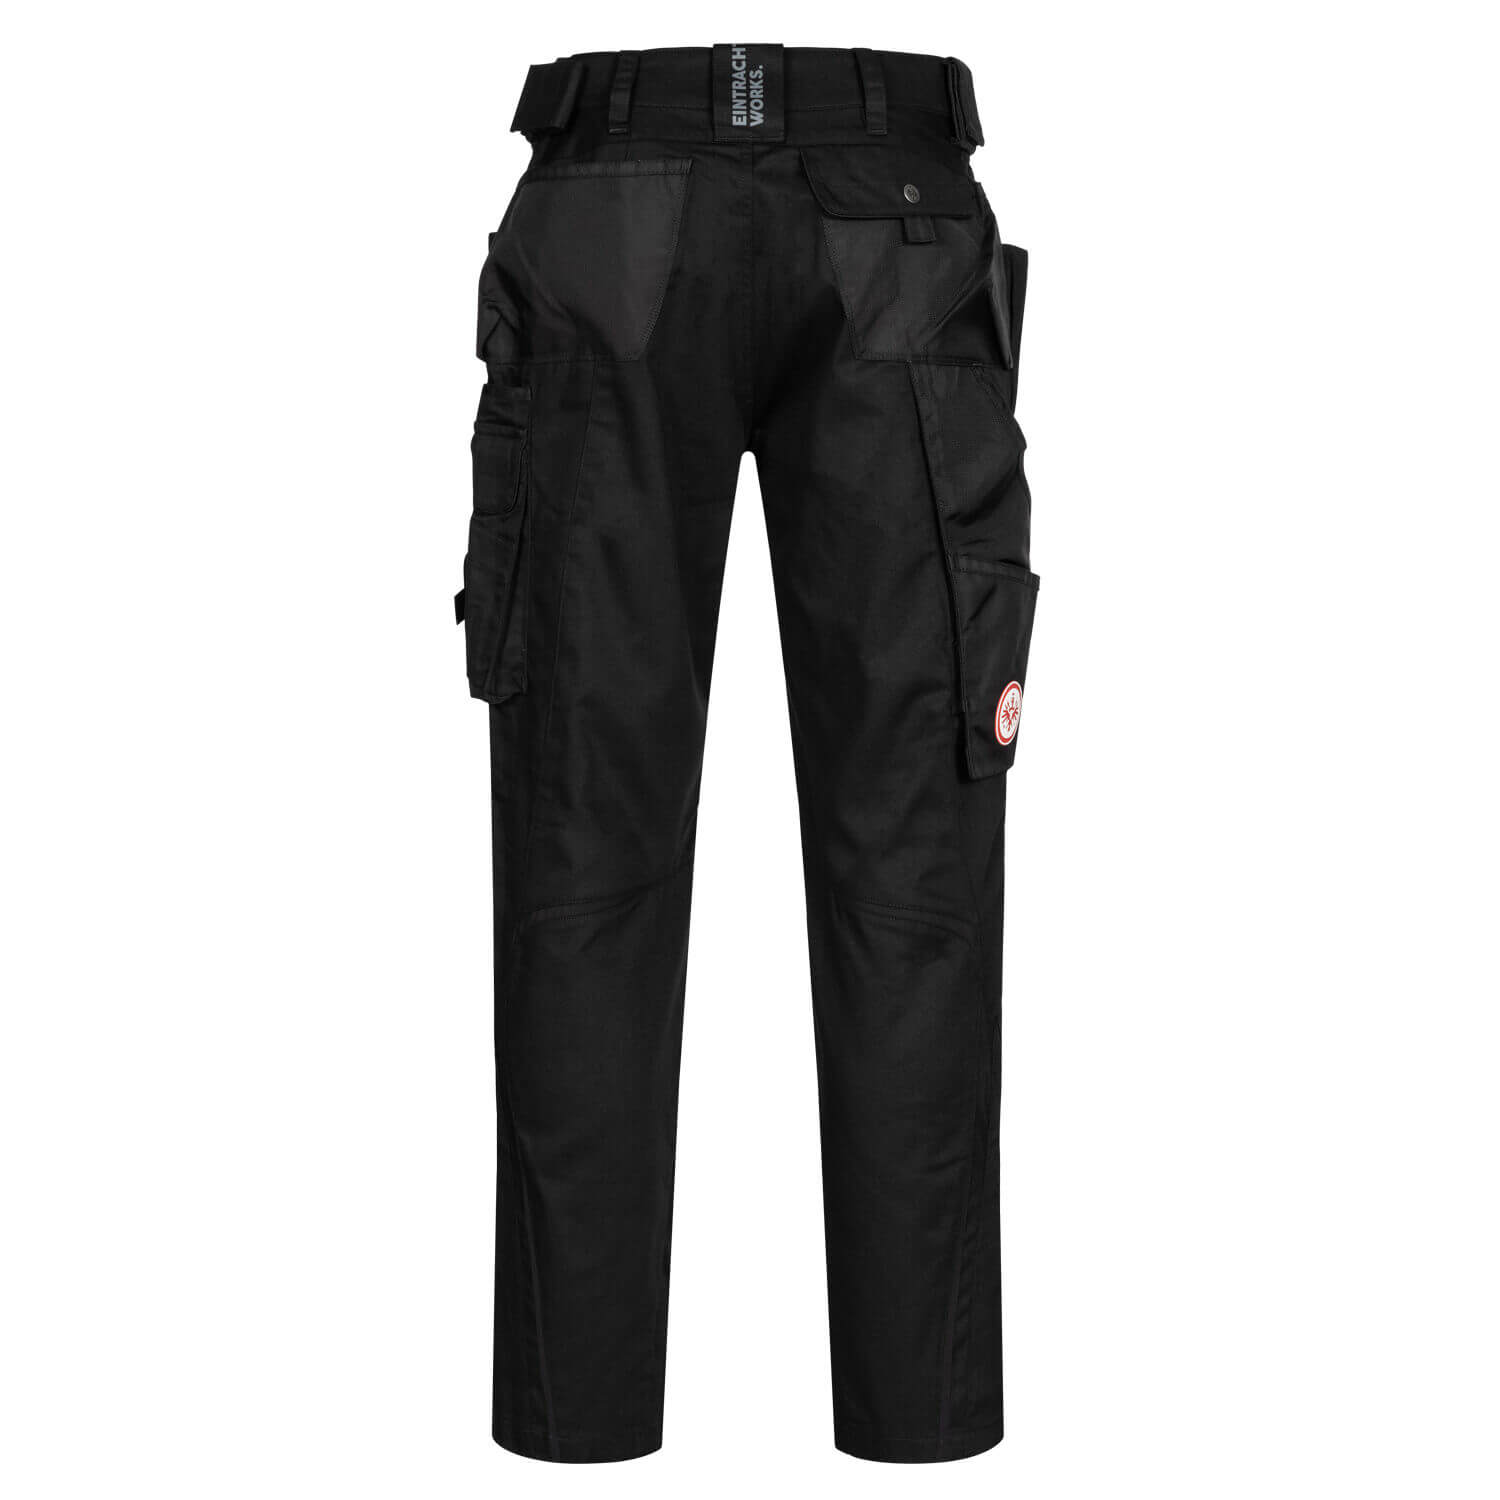 Bild 2: Workwear Pants Long Black